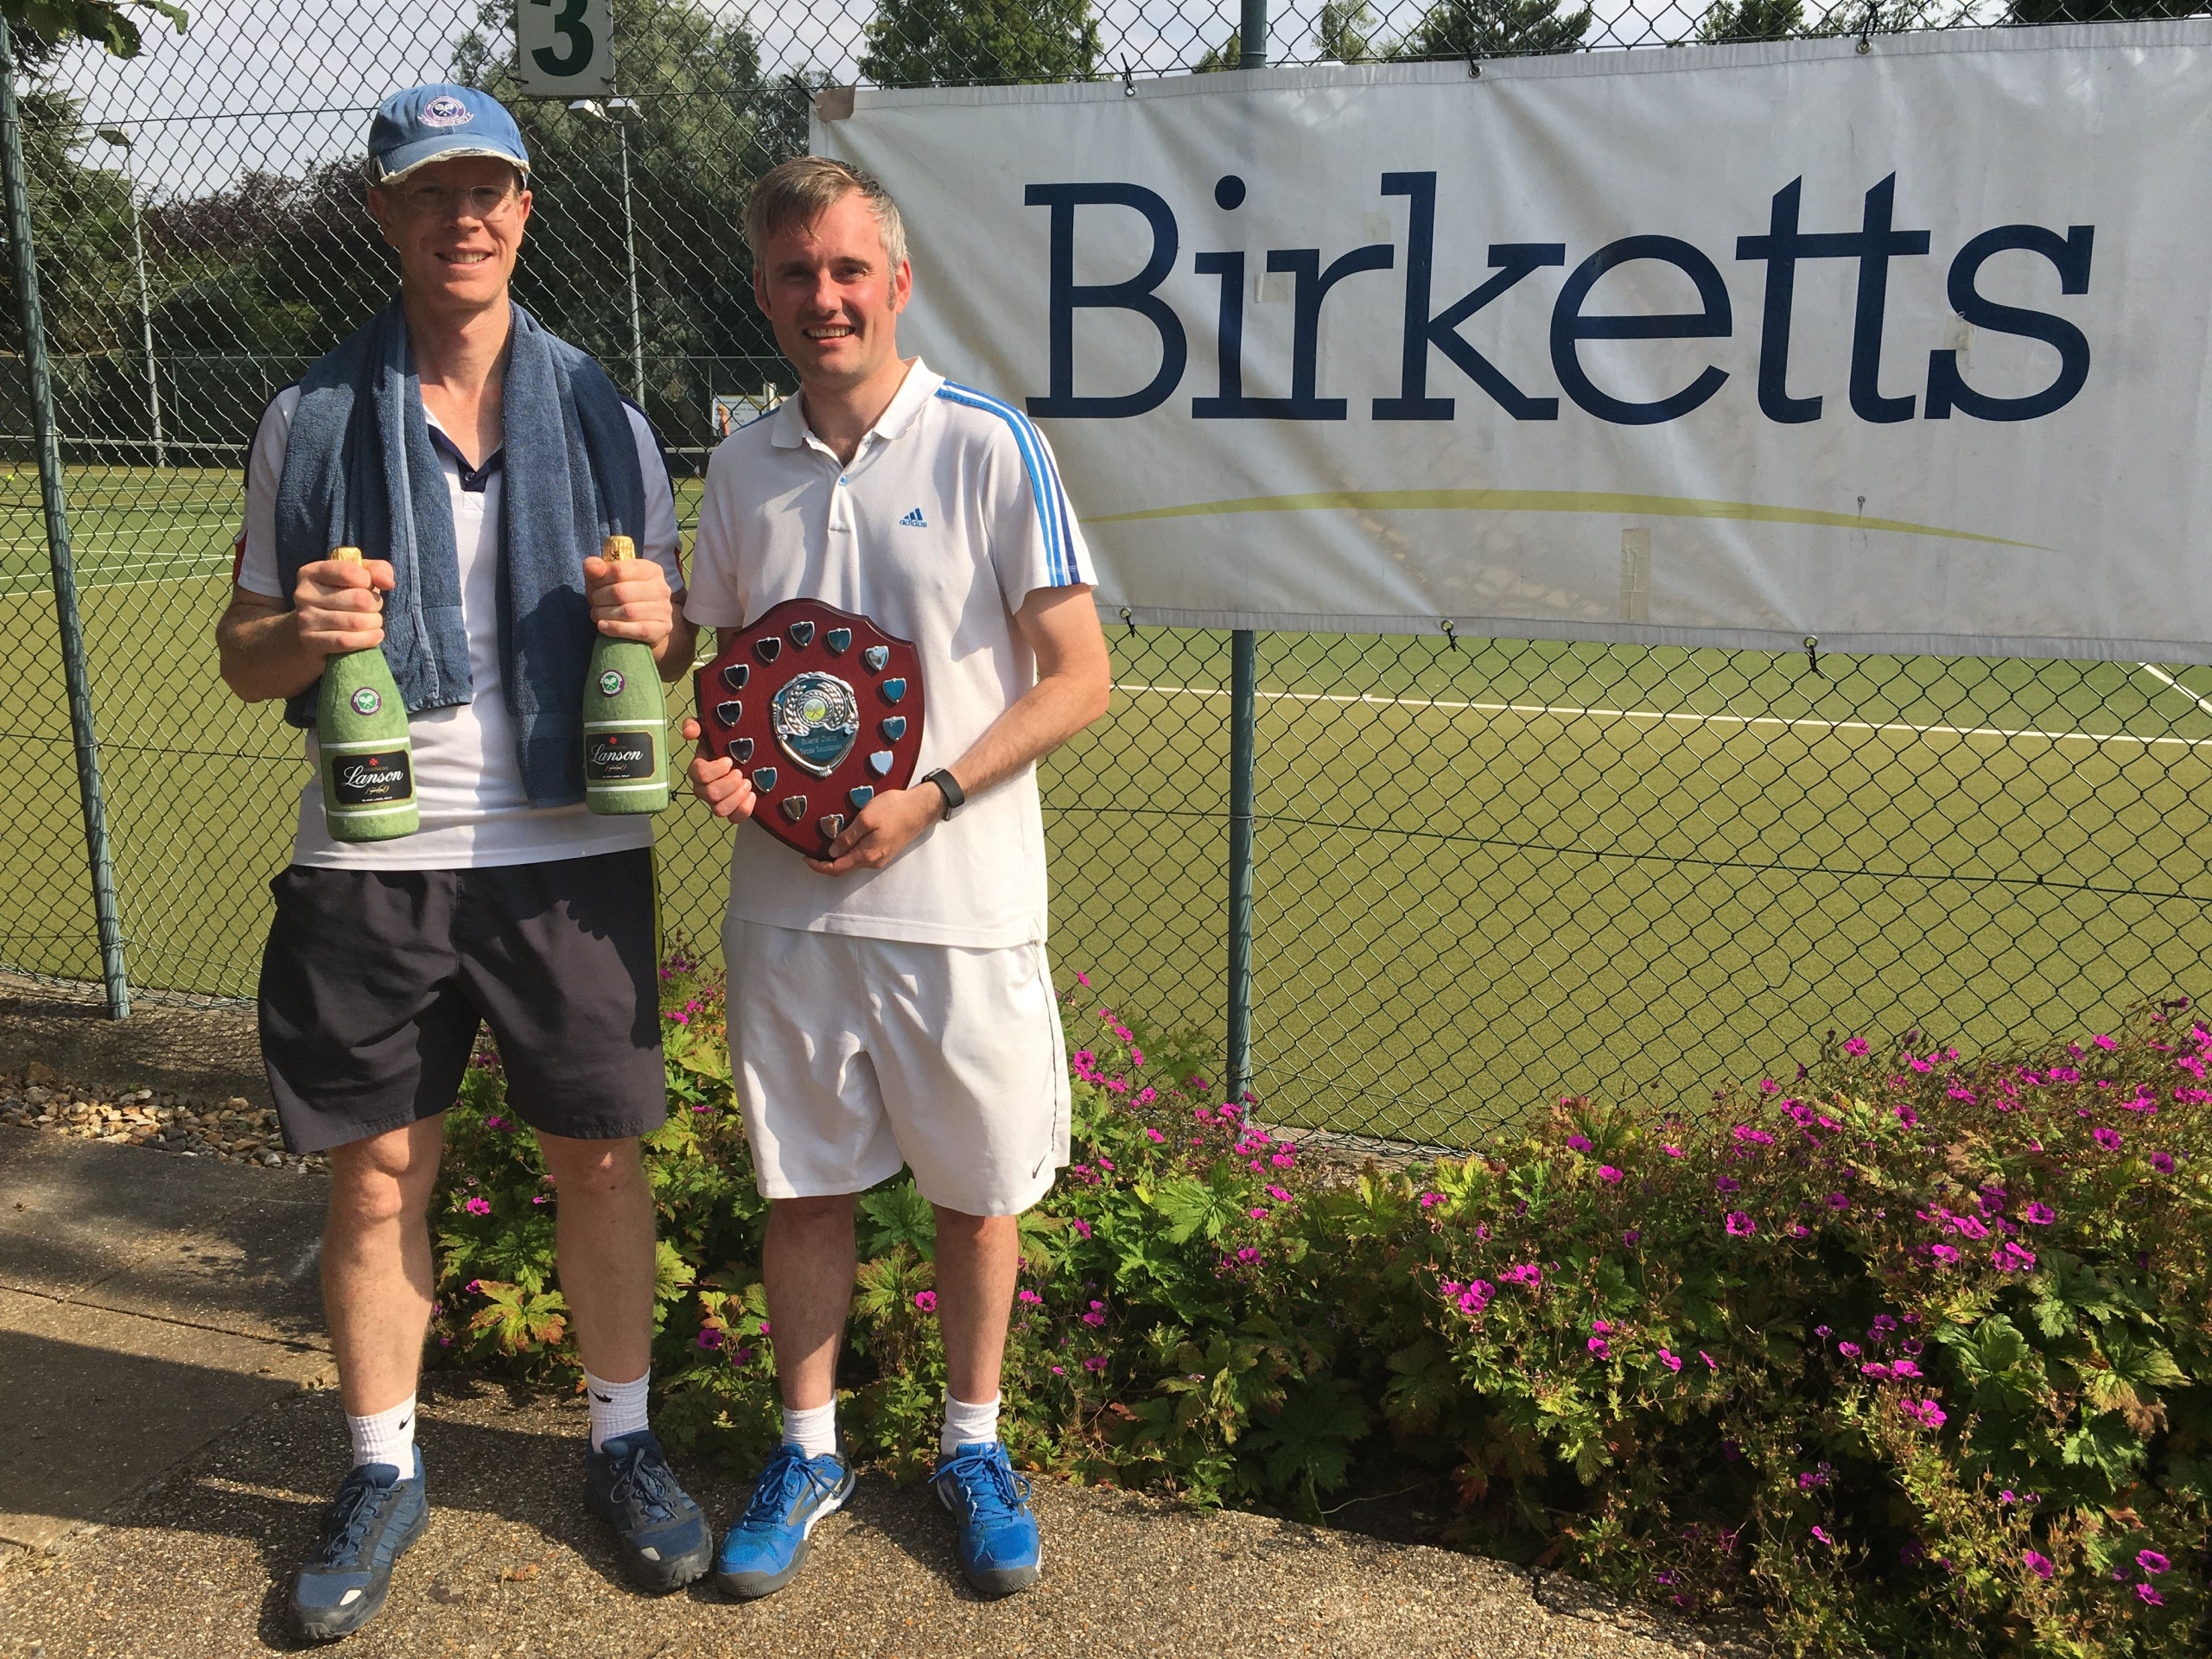 Sean Milbank and Matt Sparrow win Birketts tennis competition